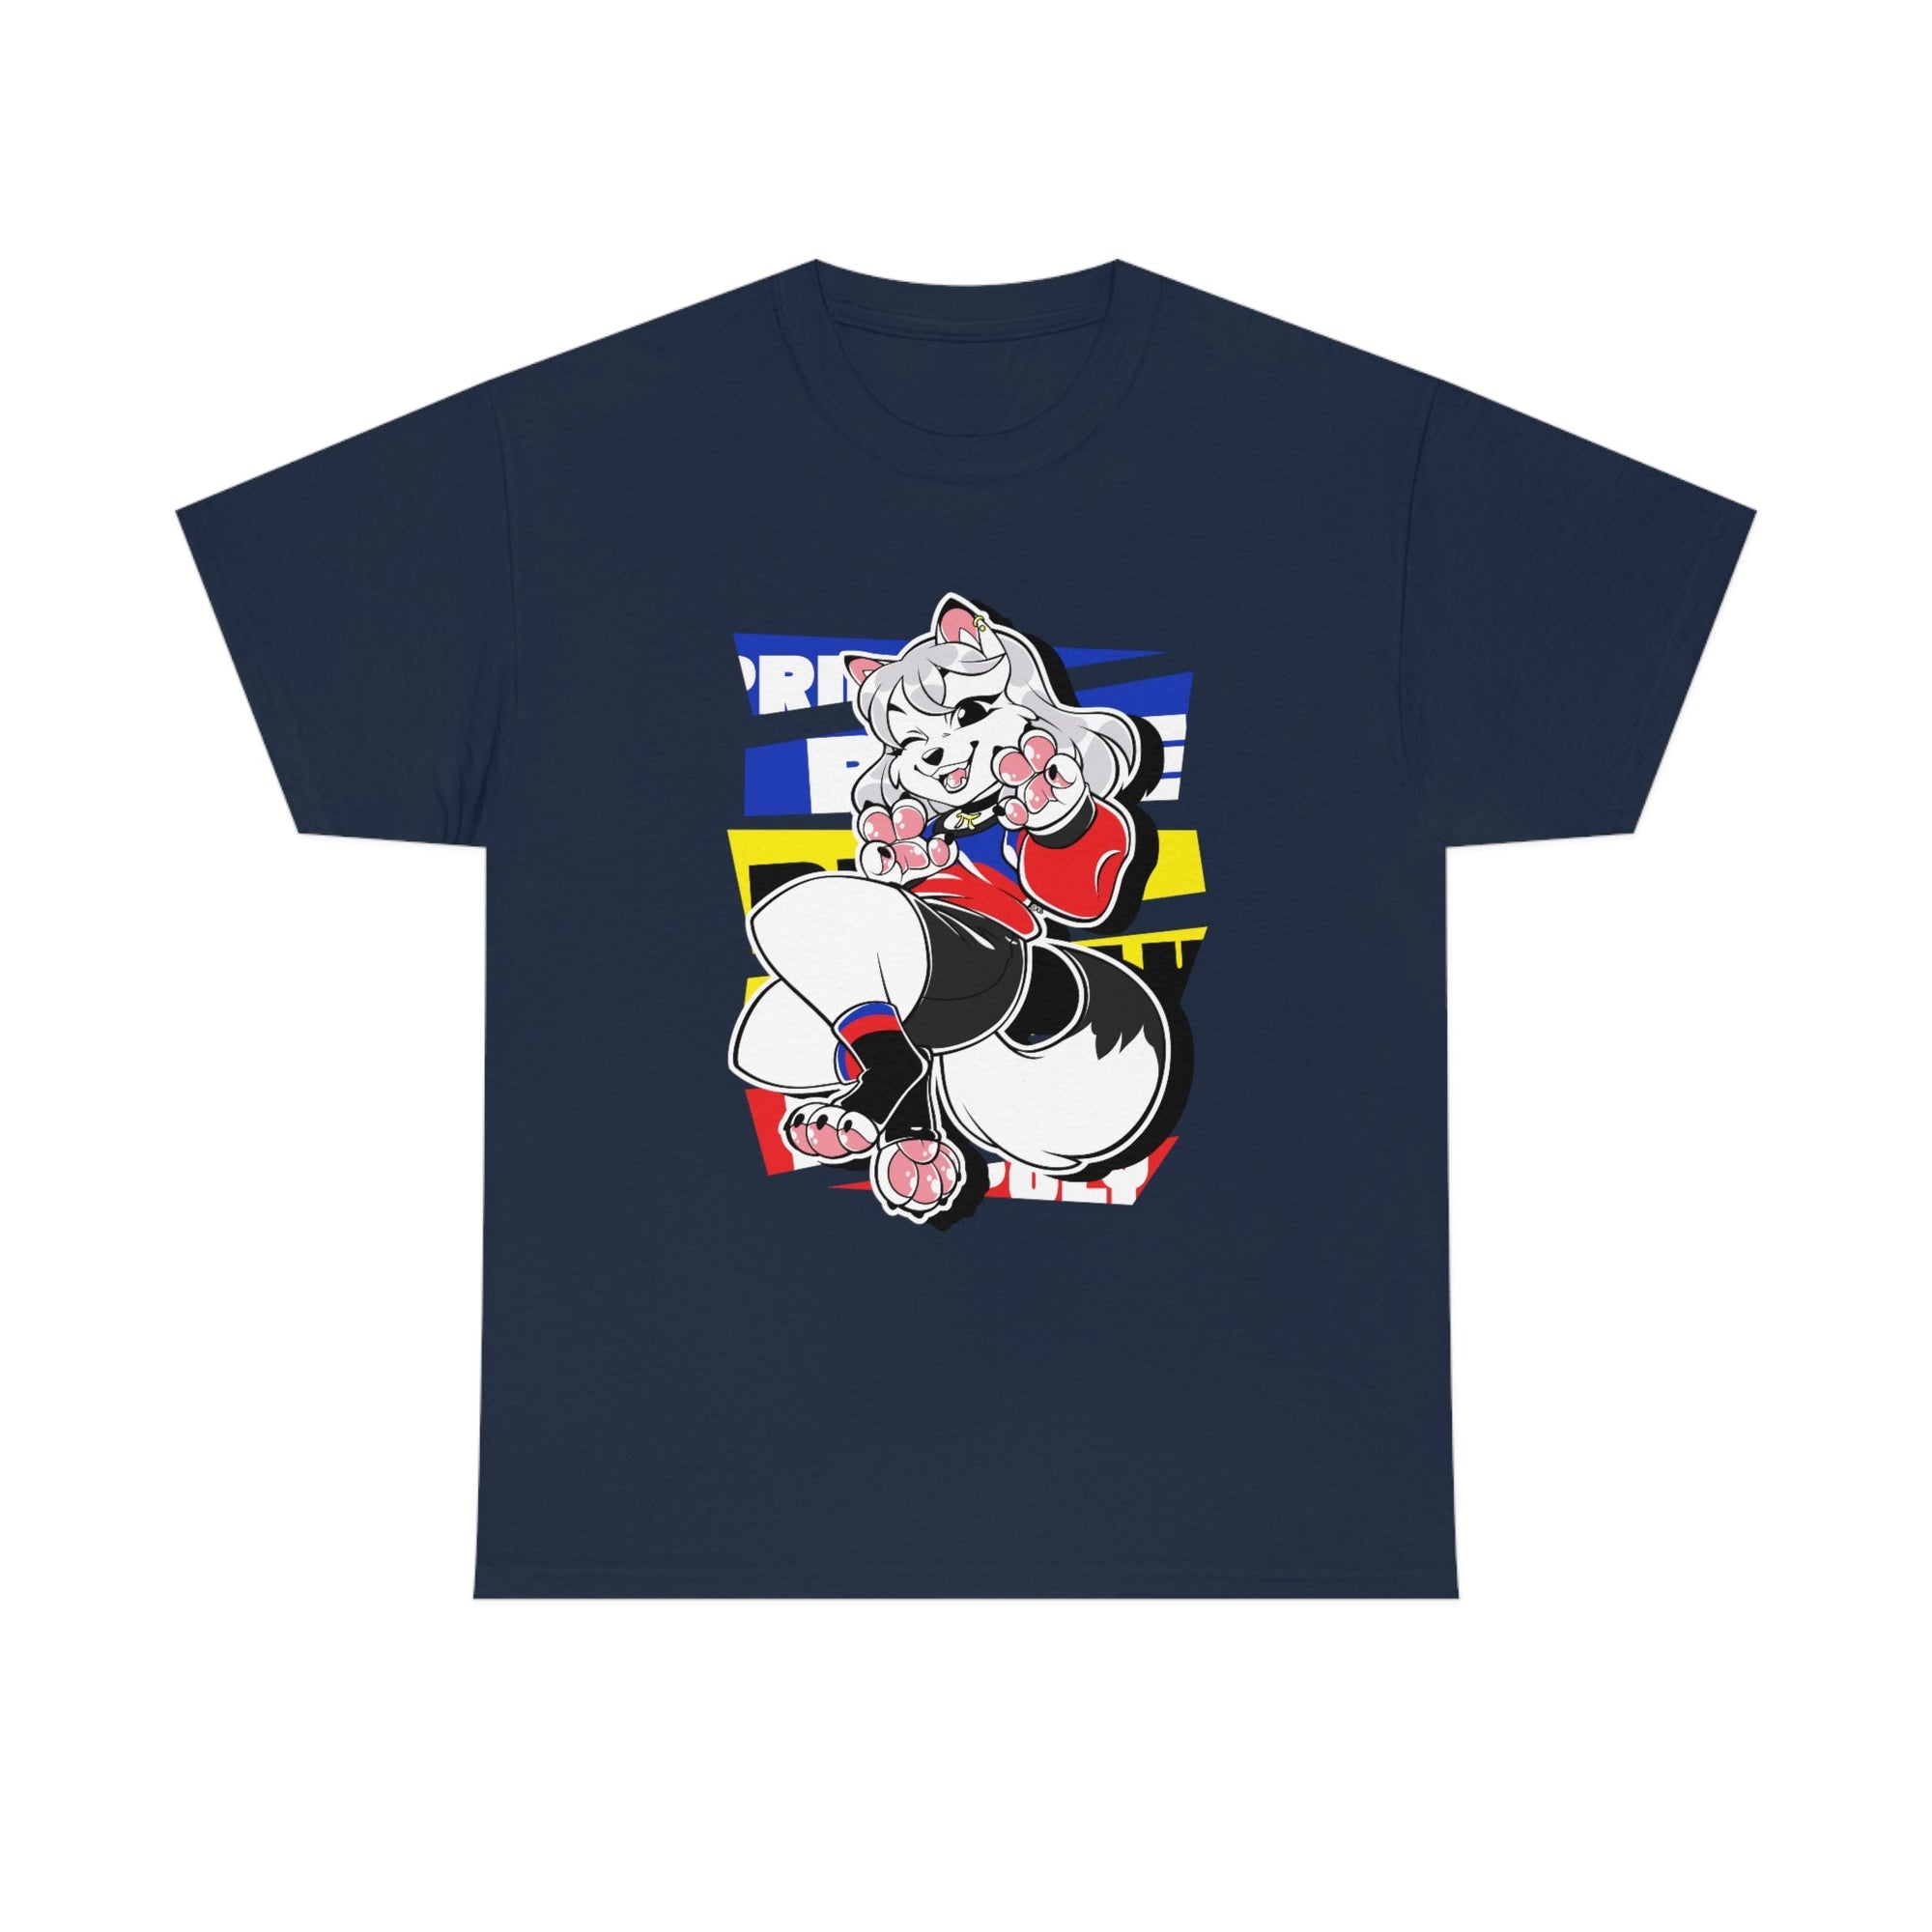 Polyamorous Pride Riley Arctic Fox - T-Shirt T-Shirt Artworktee Navy Blue S 